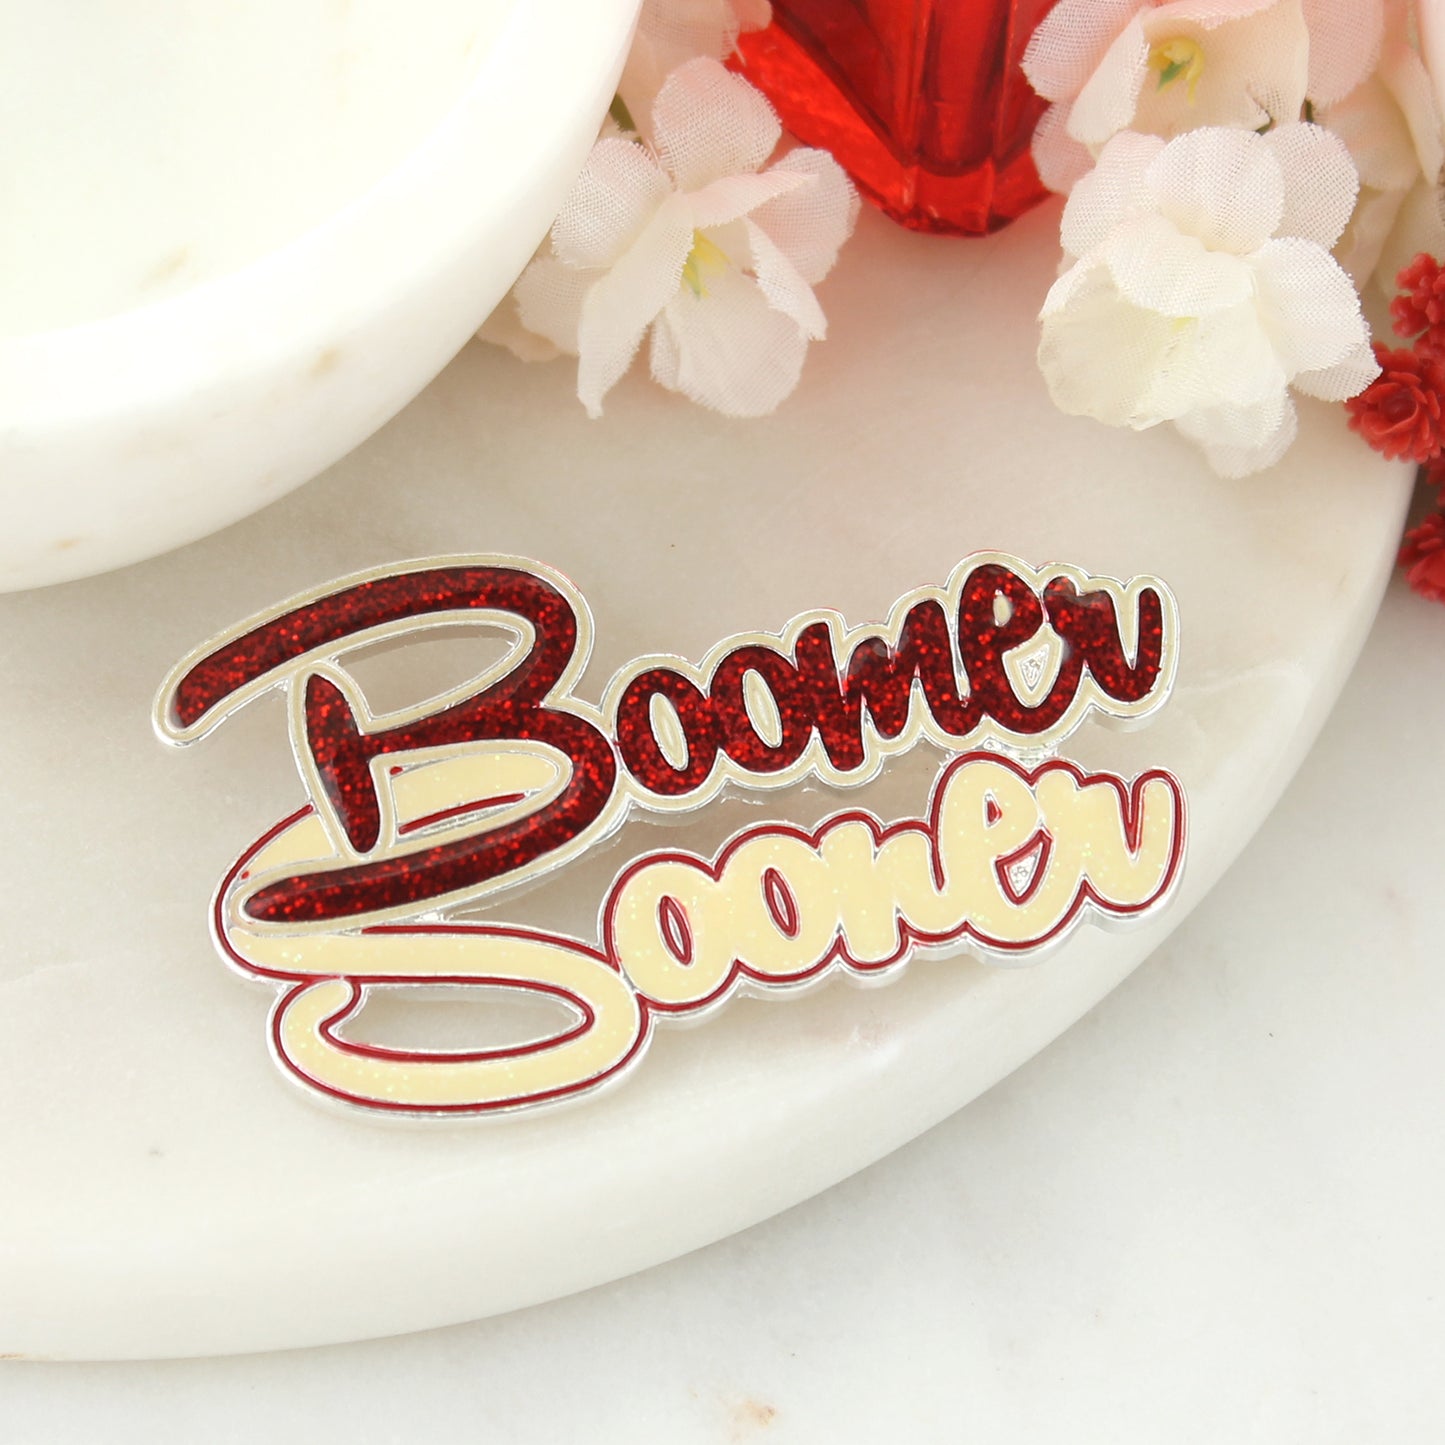 Oklahoma "Boomer Sooner" Slogan Pin - Fan Sparkle